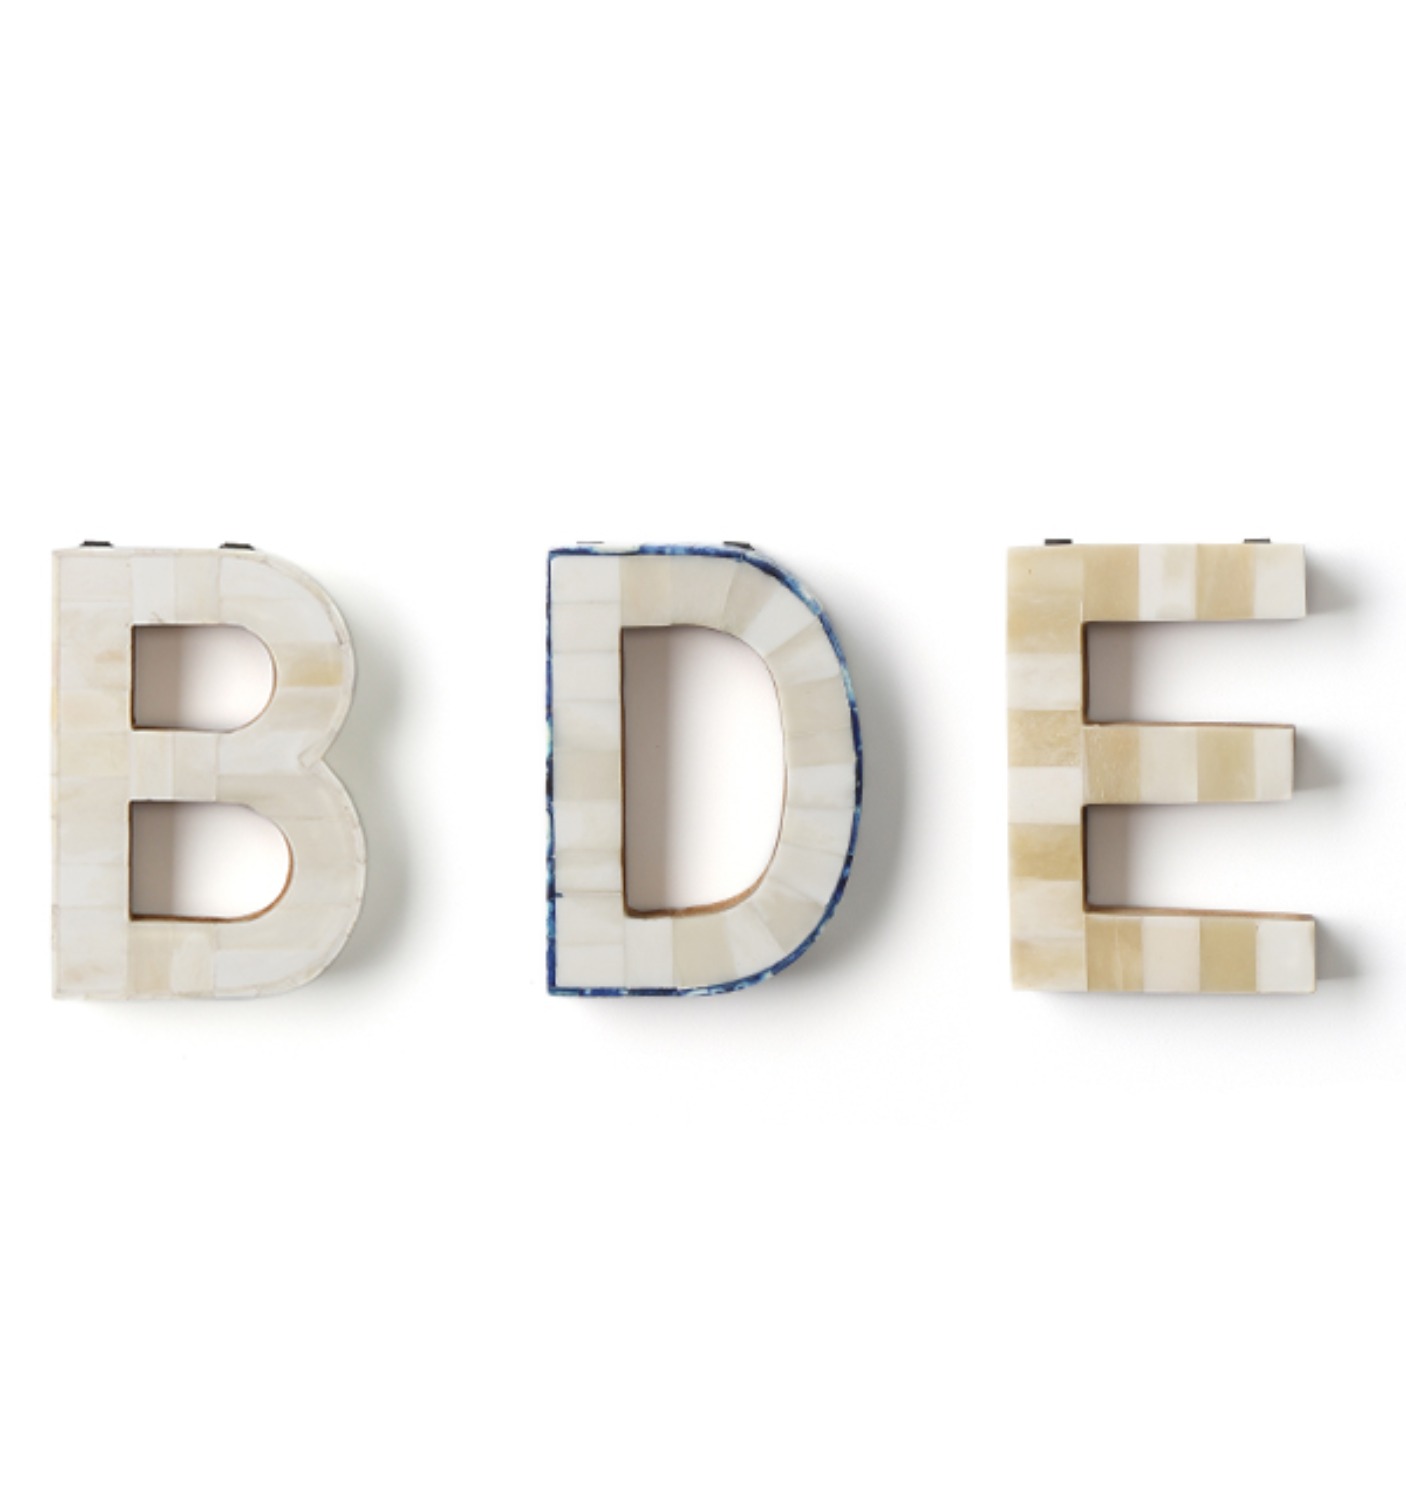 BONE OBJECT (B,D,E)